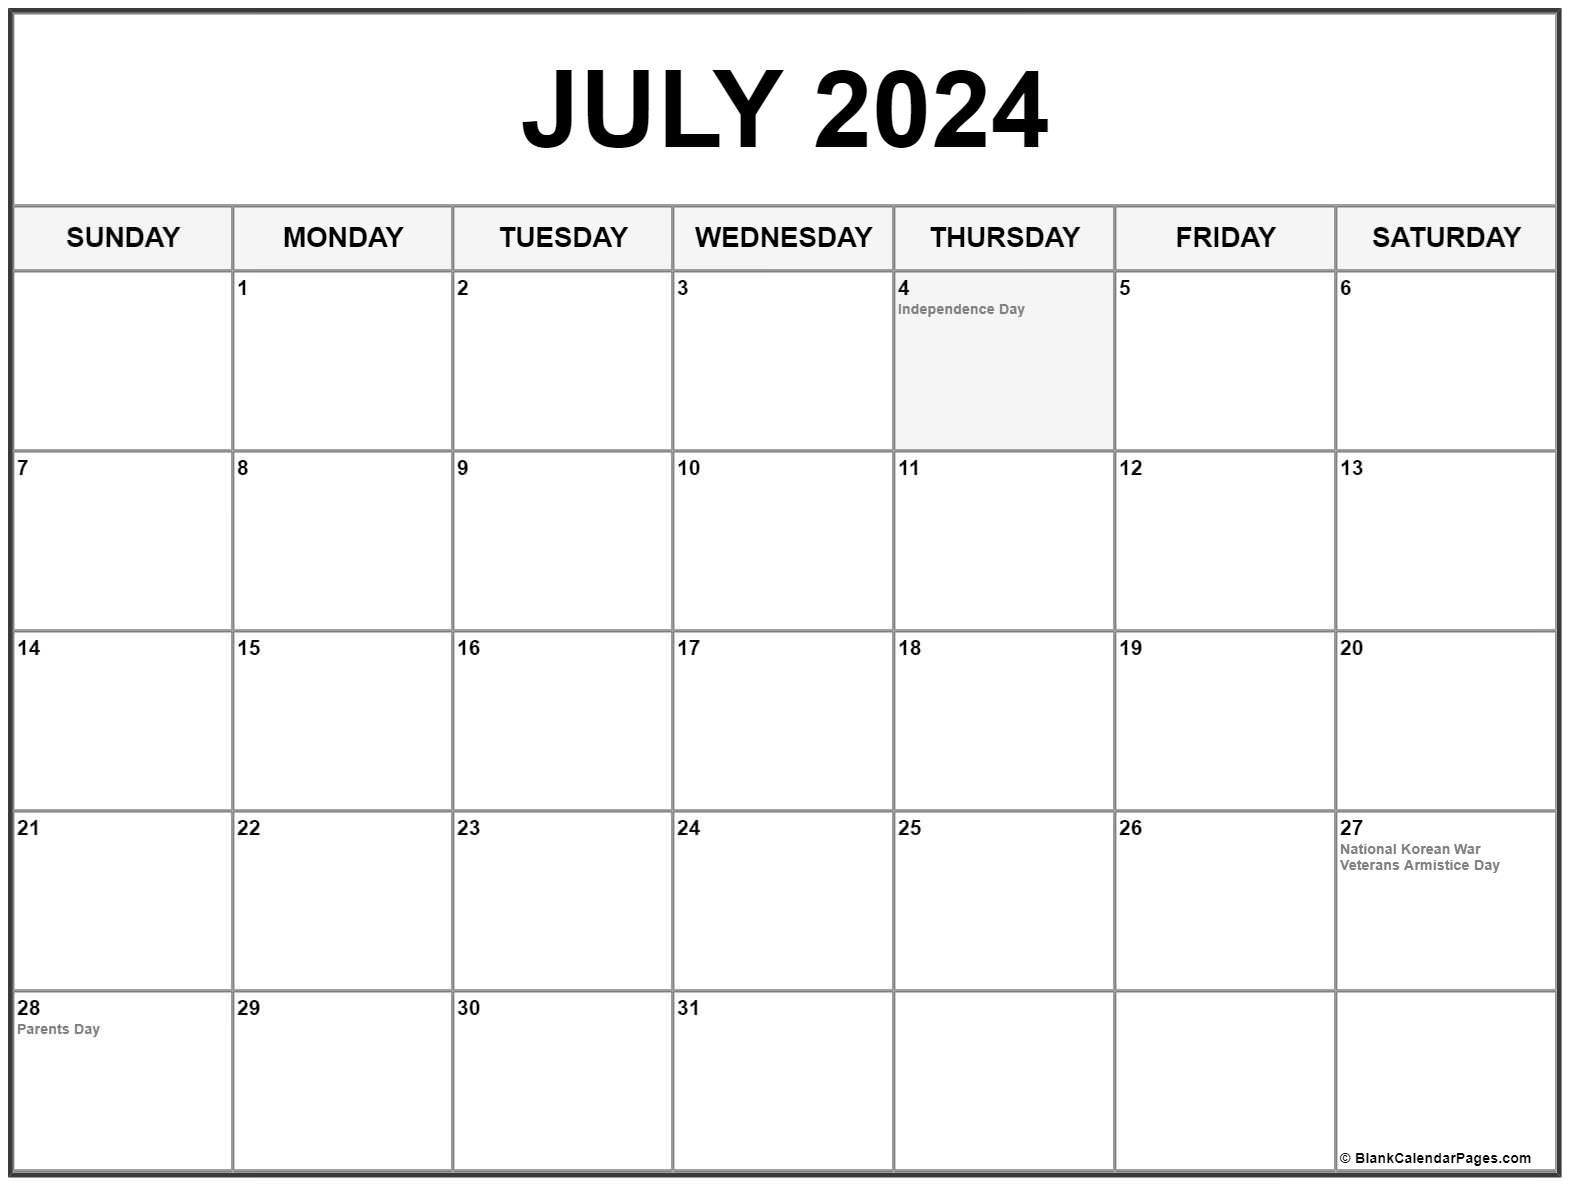 July 2023 Calendar US Holidays2 